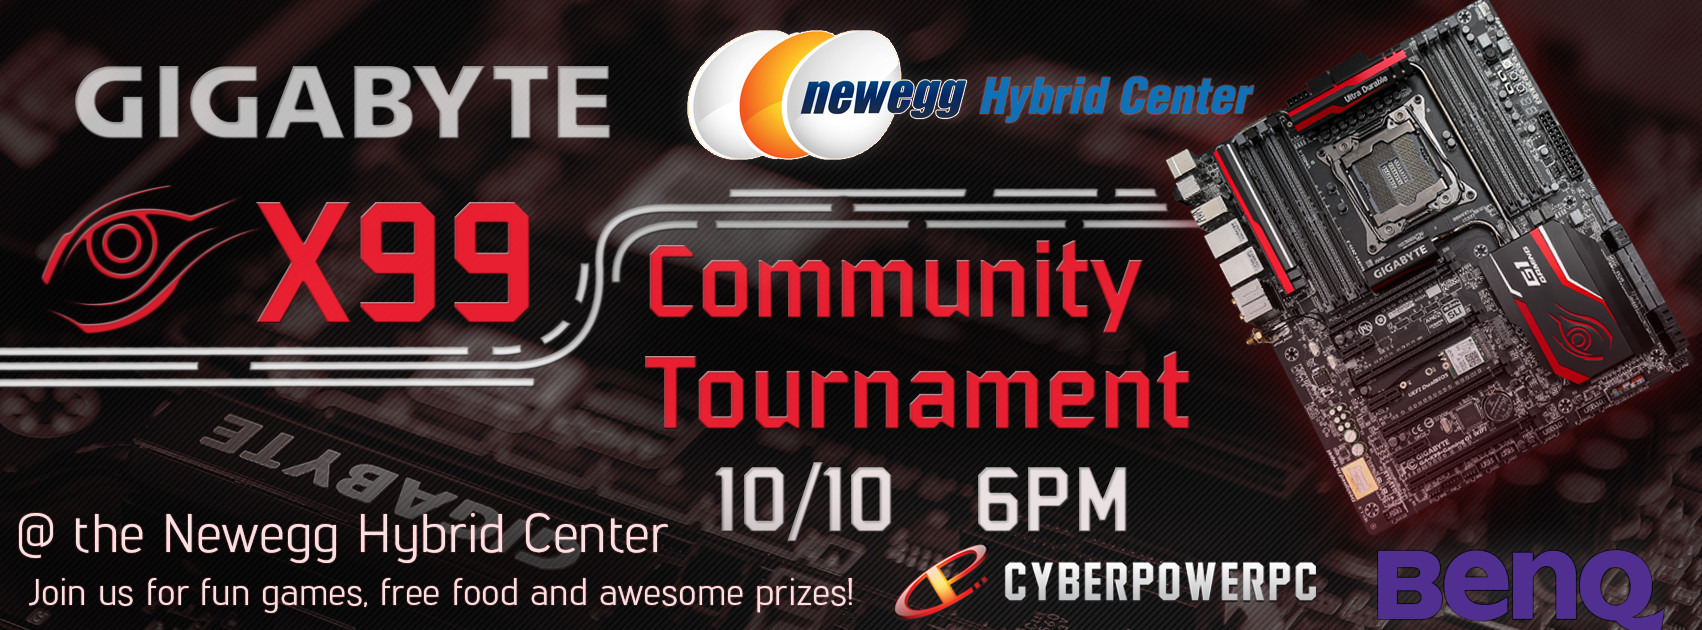 GIGABYTE X99 Community Tournament